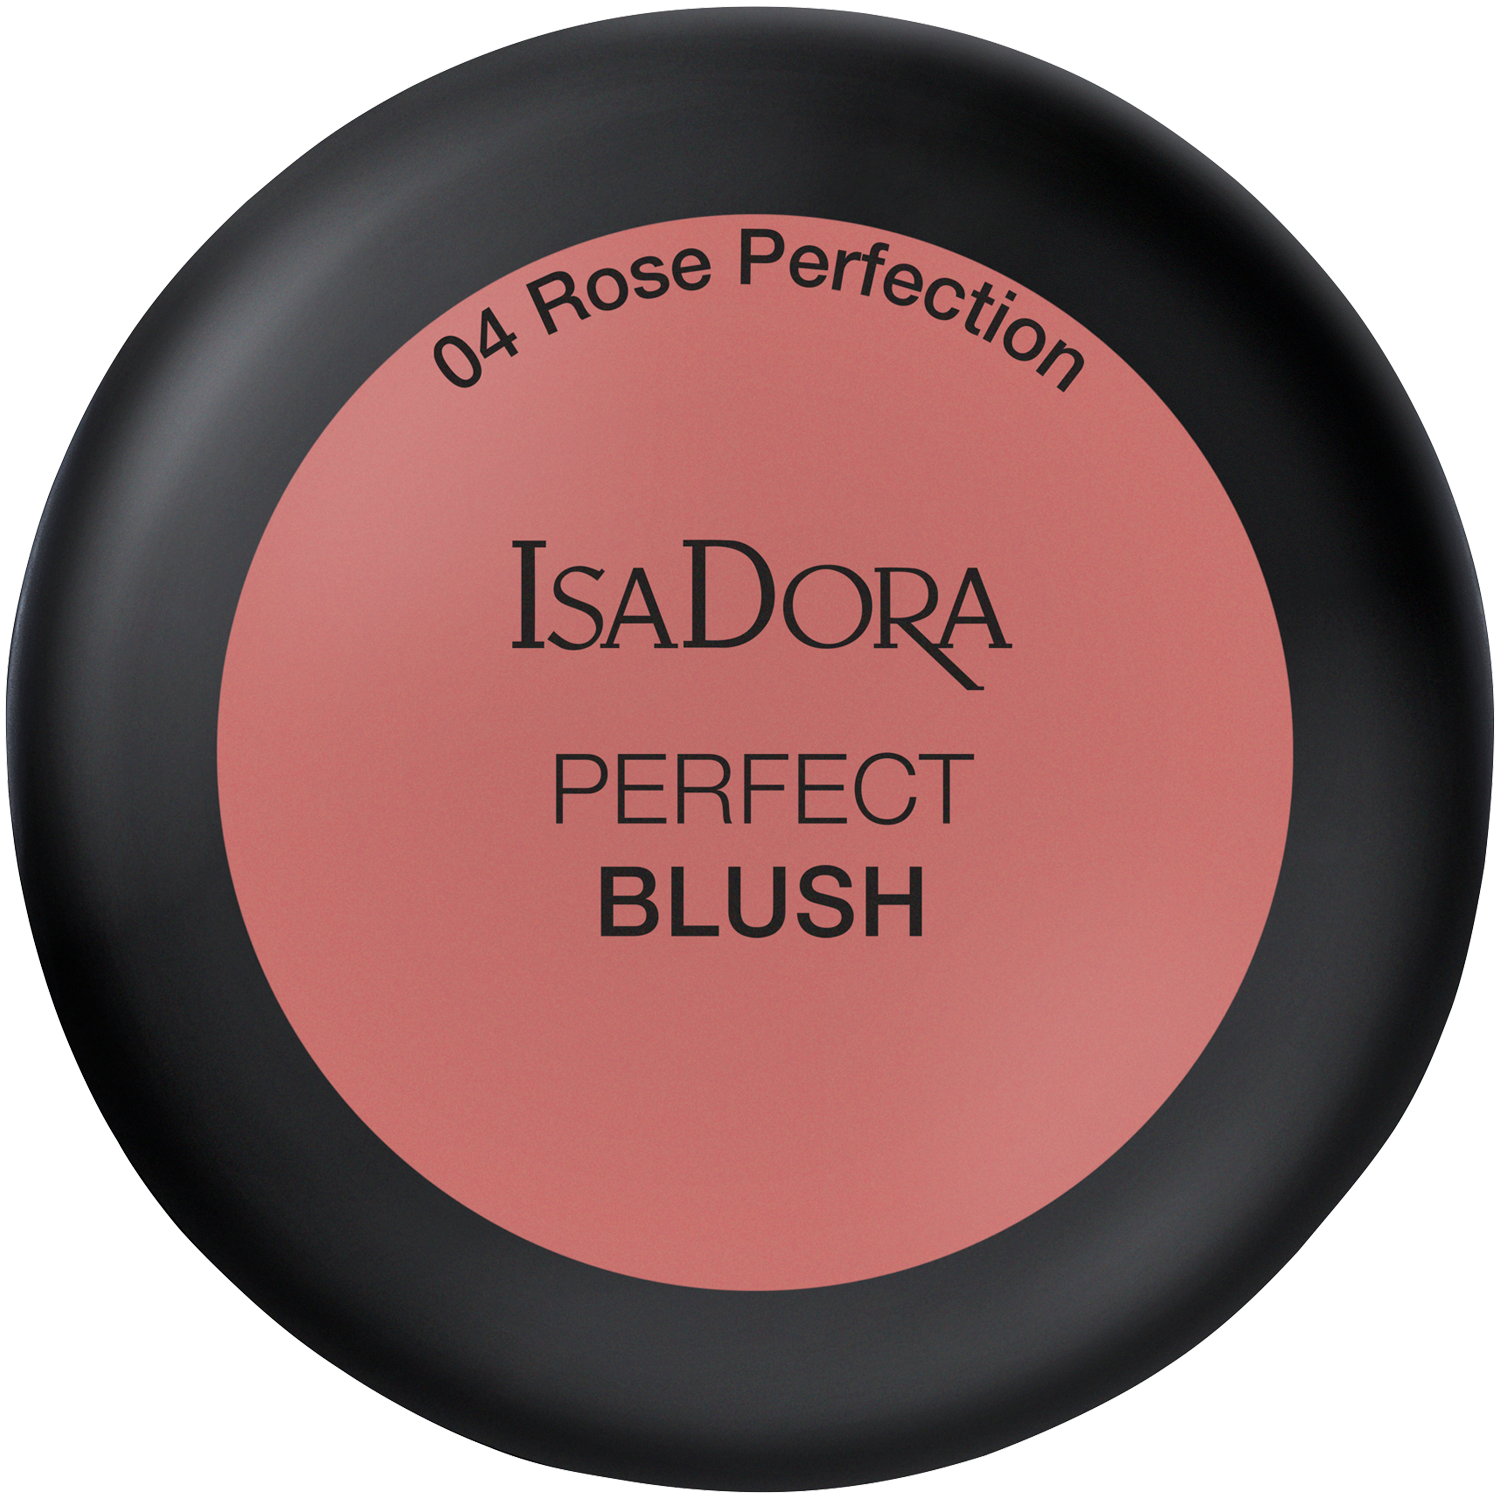 Румяна 04 rose perfection Isadora Perfect Blush, 4,5 гр румяна 04 rose perfection isadora perfect blush 4 5 гр